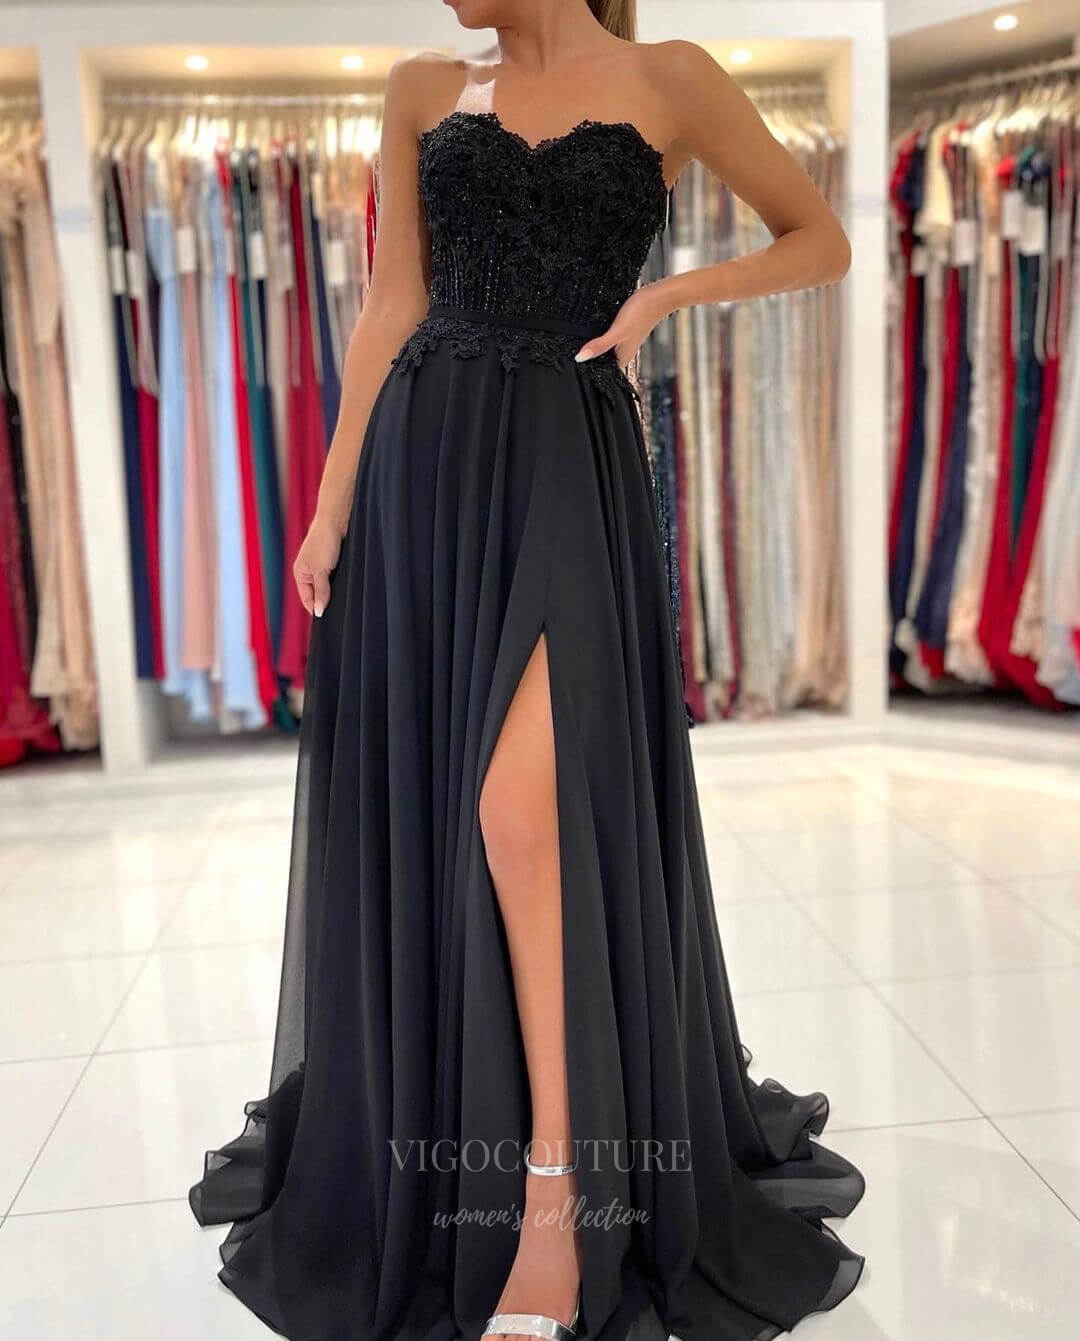 vigocouture-Strapless Chiffon Beaded Lace Applique Prom Dress 20832-Prom Dresses-vigocouture-Black-US2-